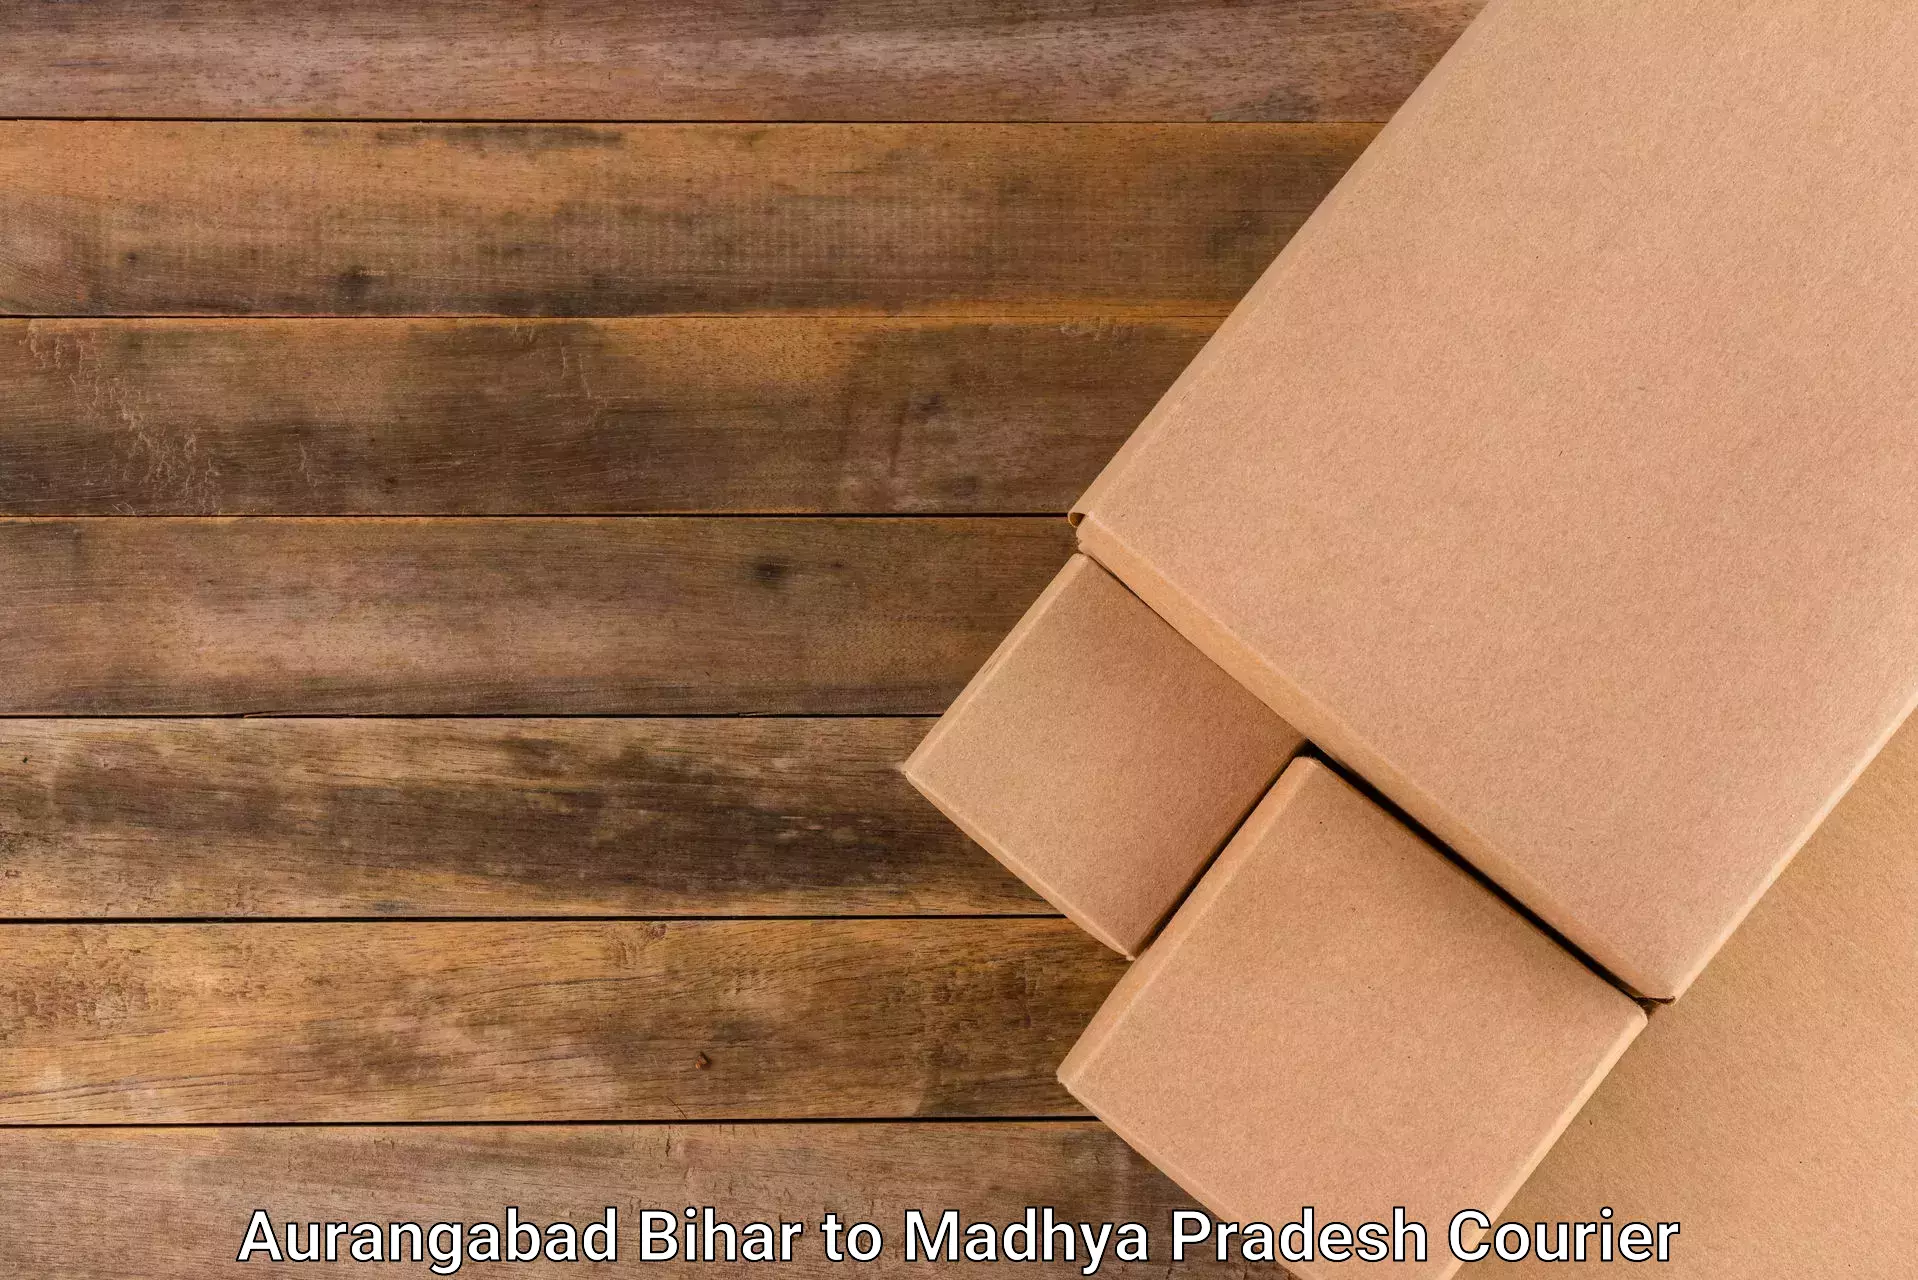 Large package courier Aurangabad Bihar to Madhya Pradesh